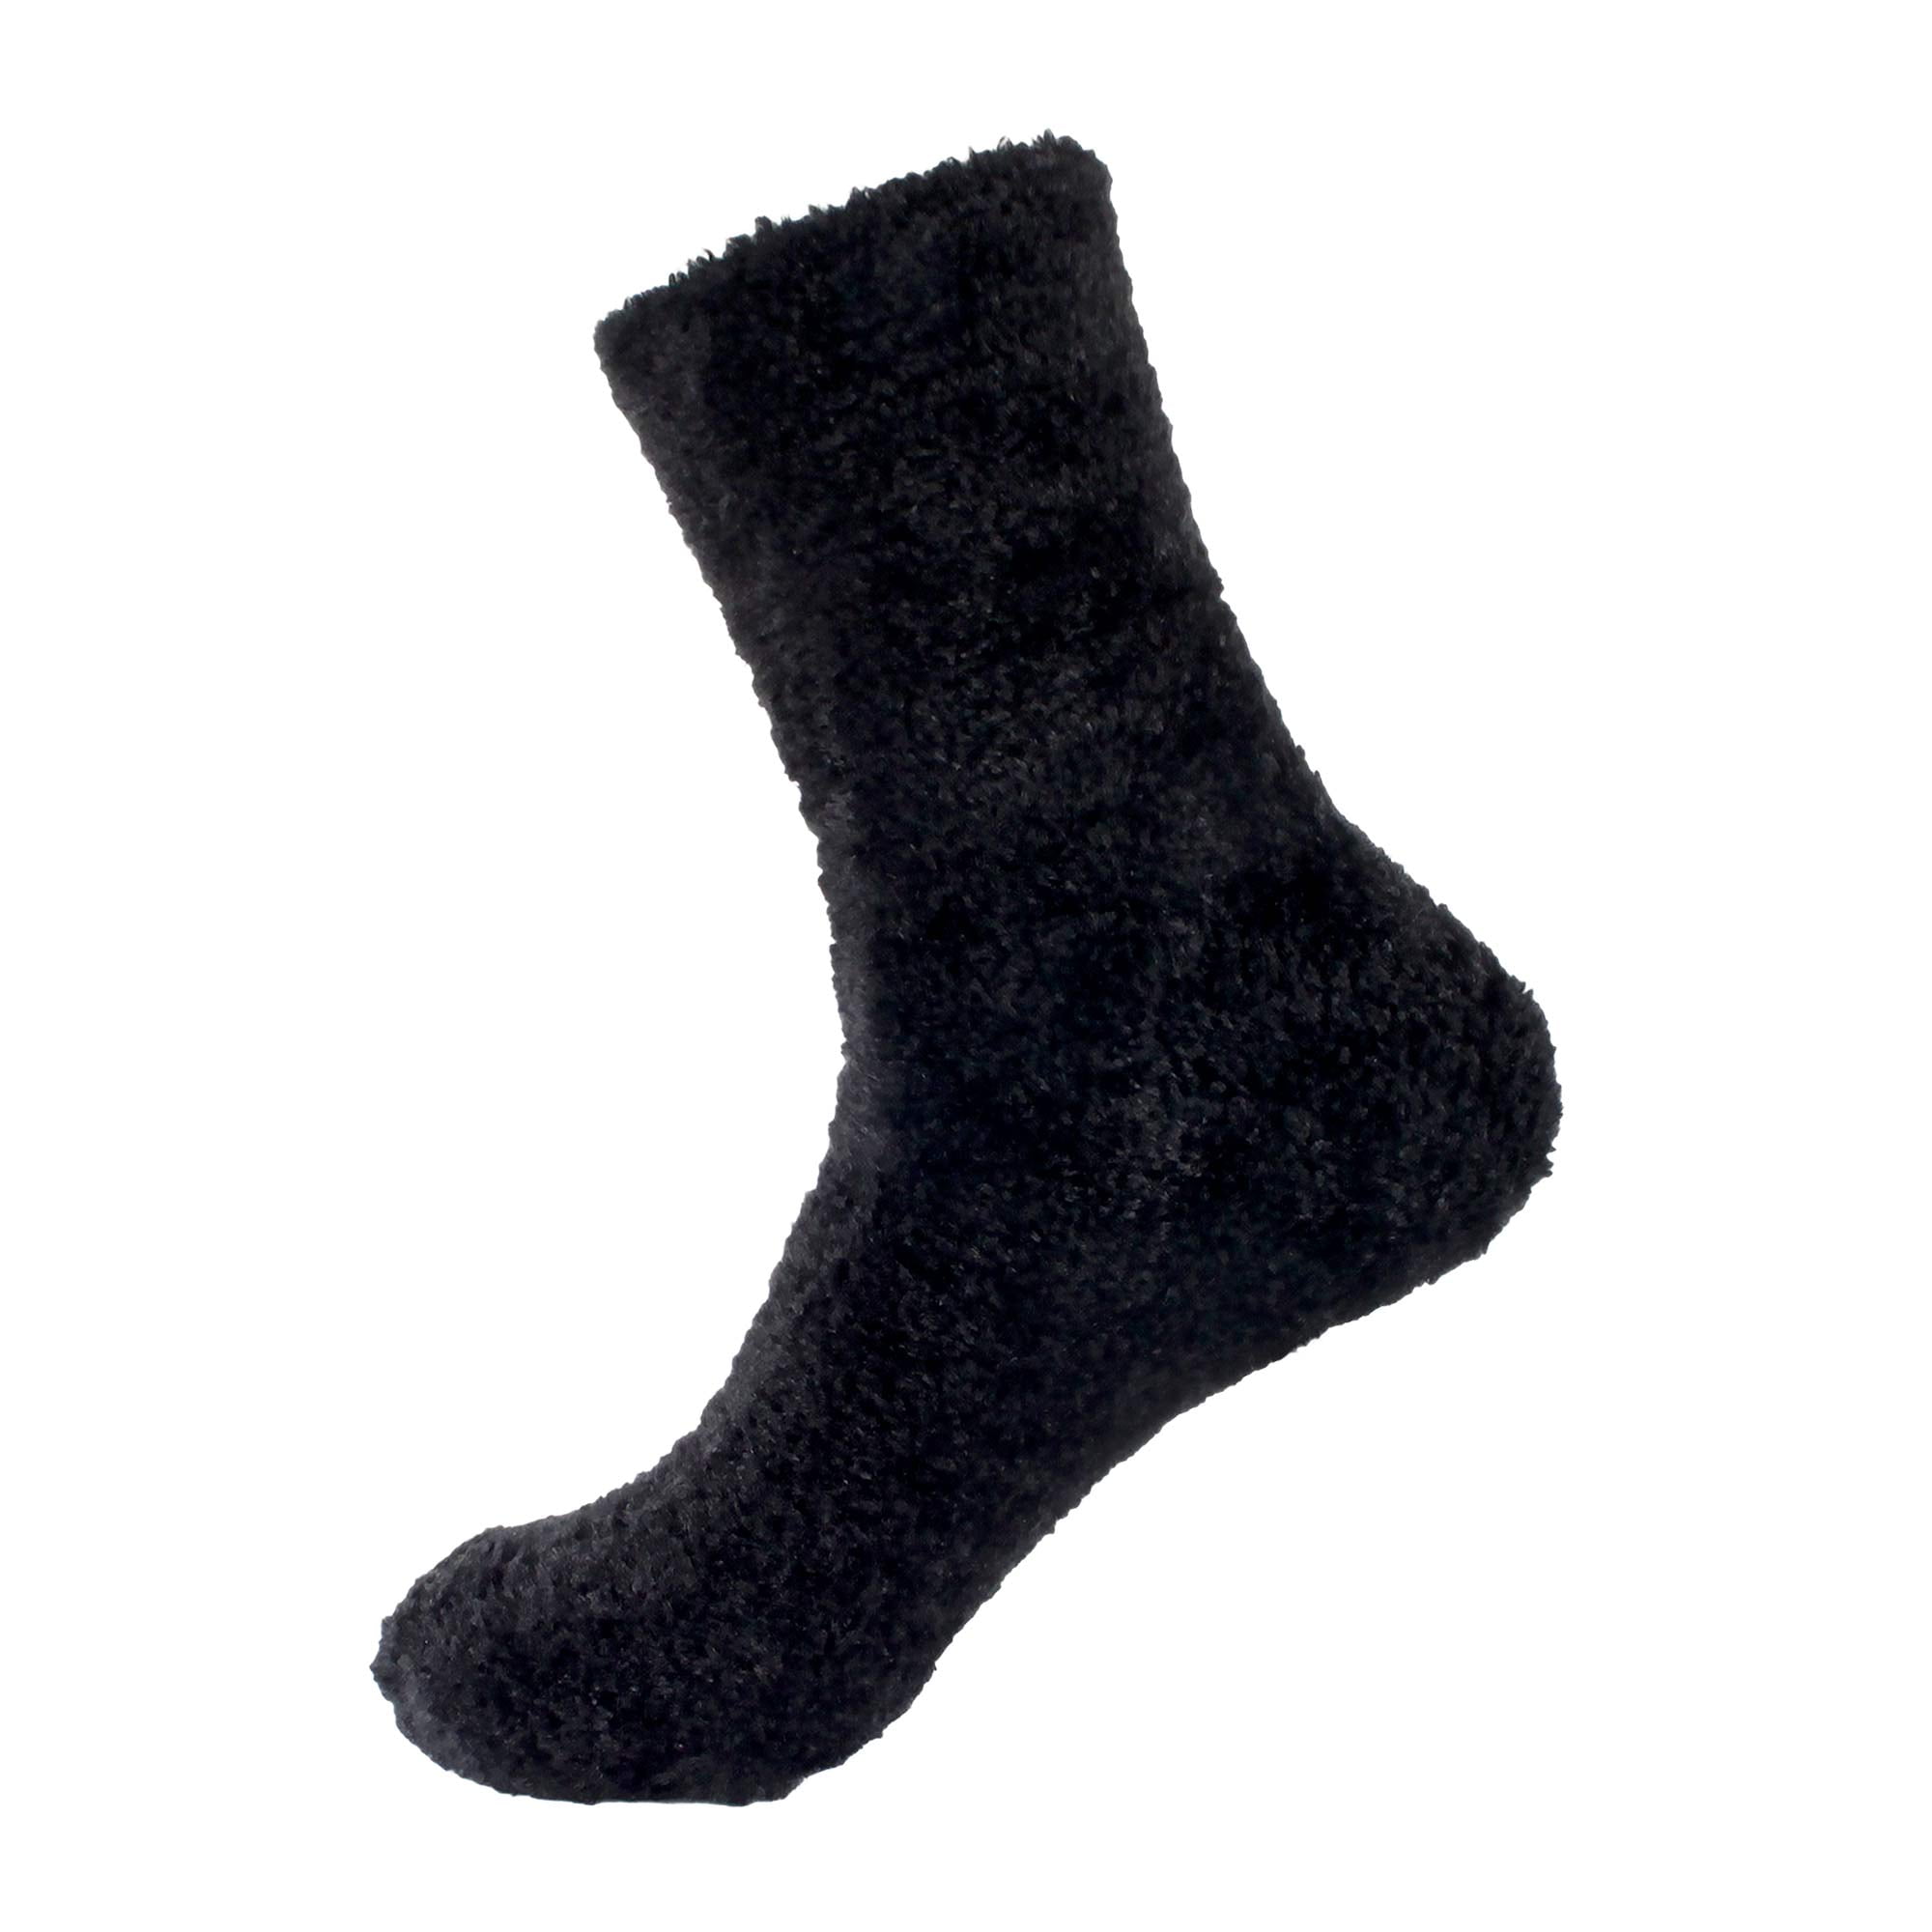 Medium/Large Comfy Warm Plush Slipper Bed Fuzzy Socks - Black 4 Pairs - Walmart.com